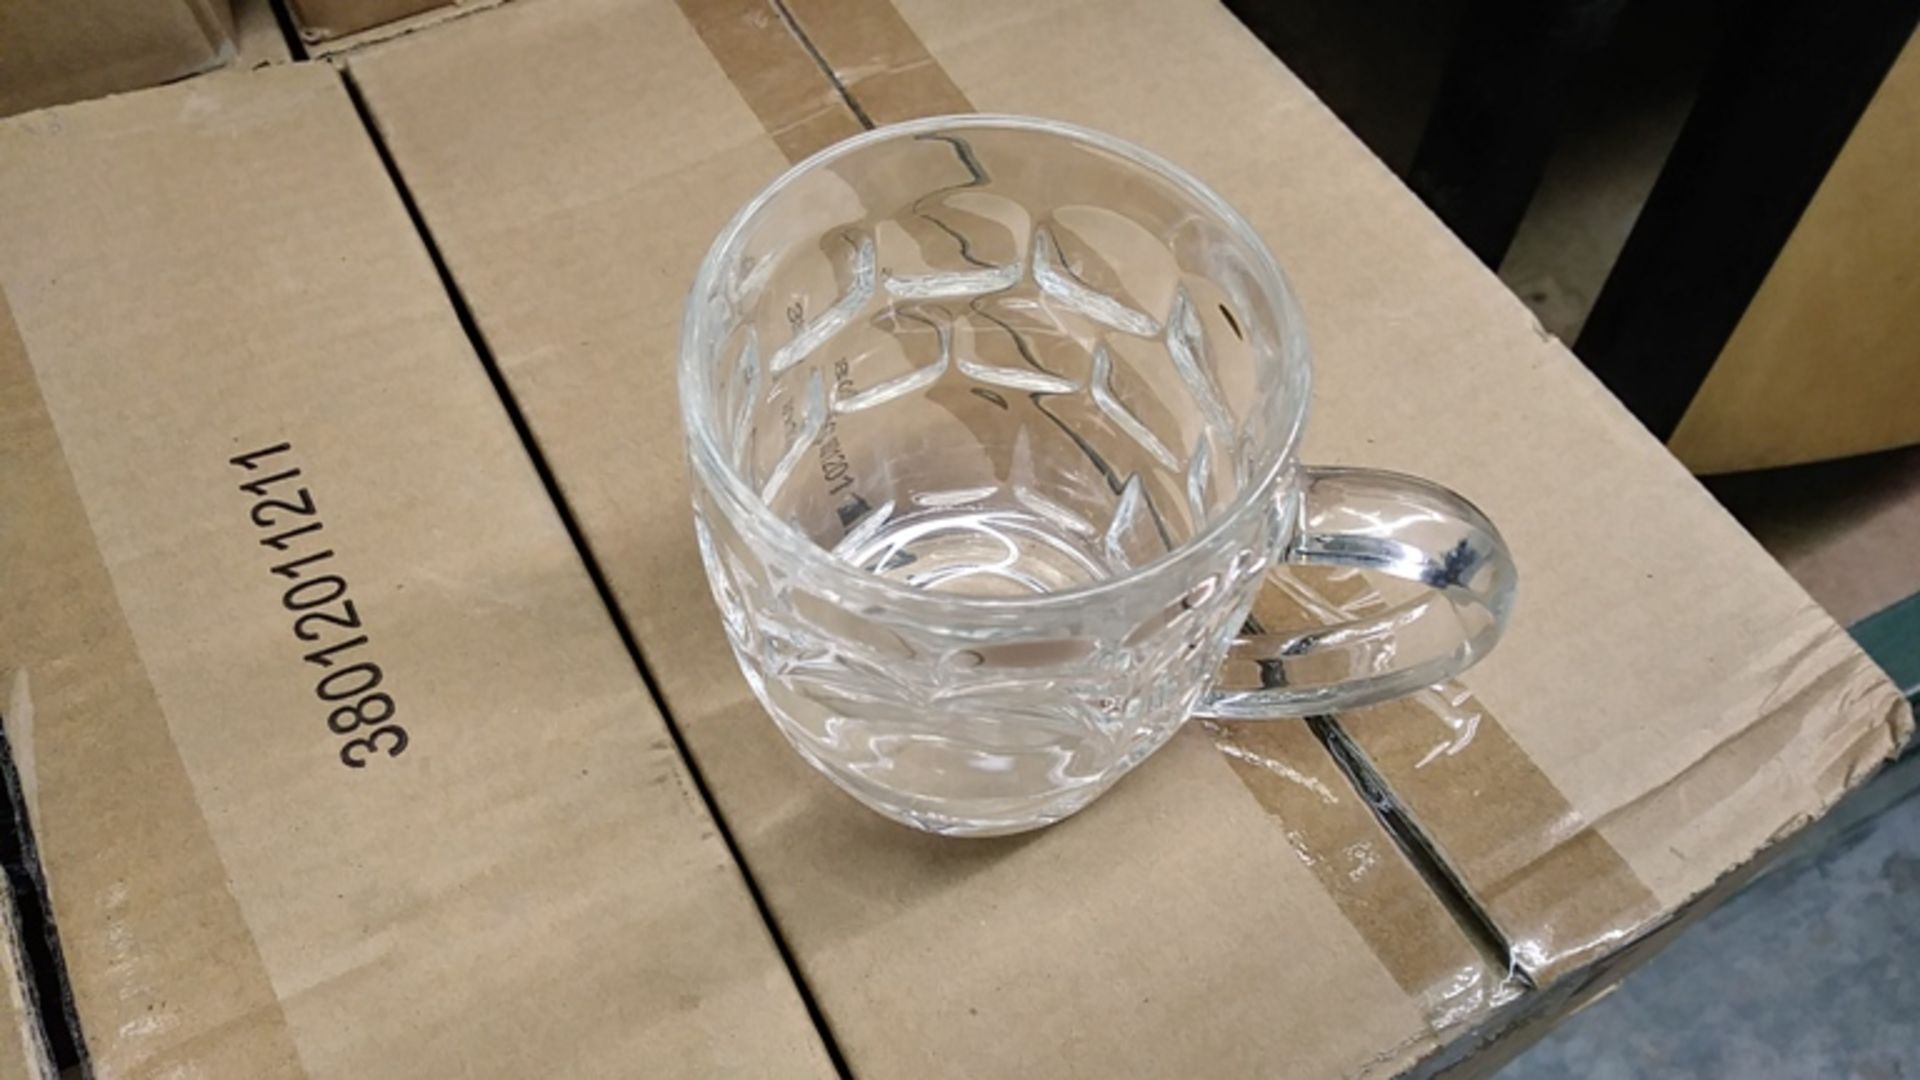 NEW 10OZ ARCOROC BRITANNIA GLASS MUG (INCLUDES 7 box of 36 = 252 MUGS) - Image 3 of 3